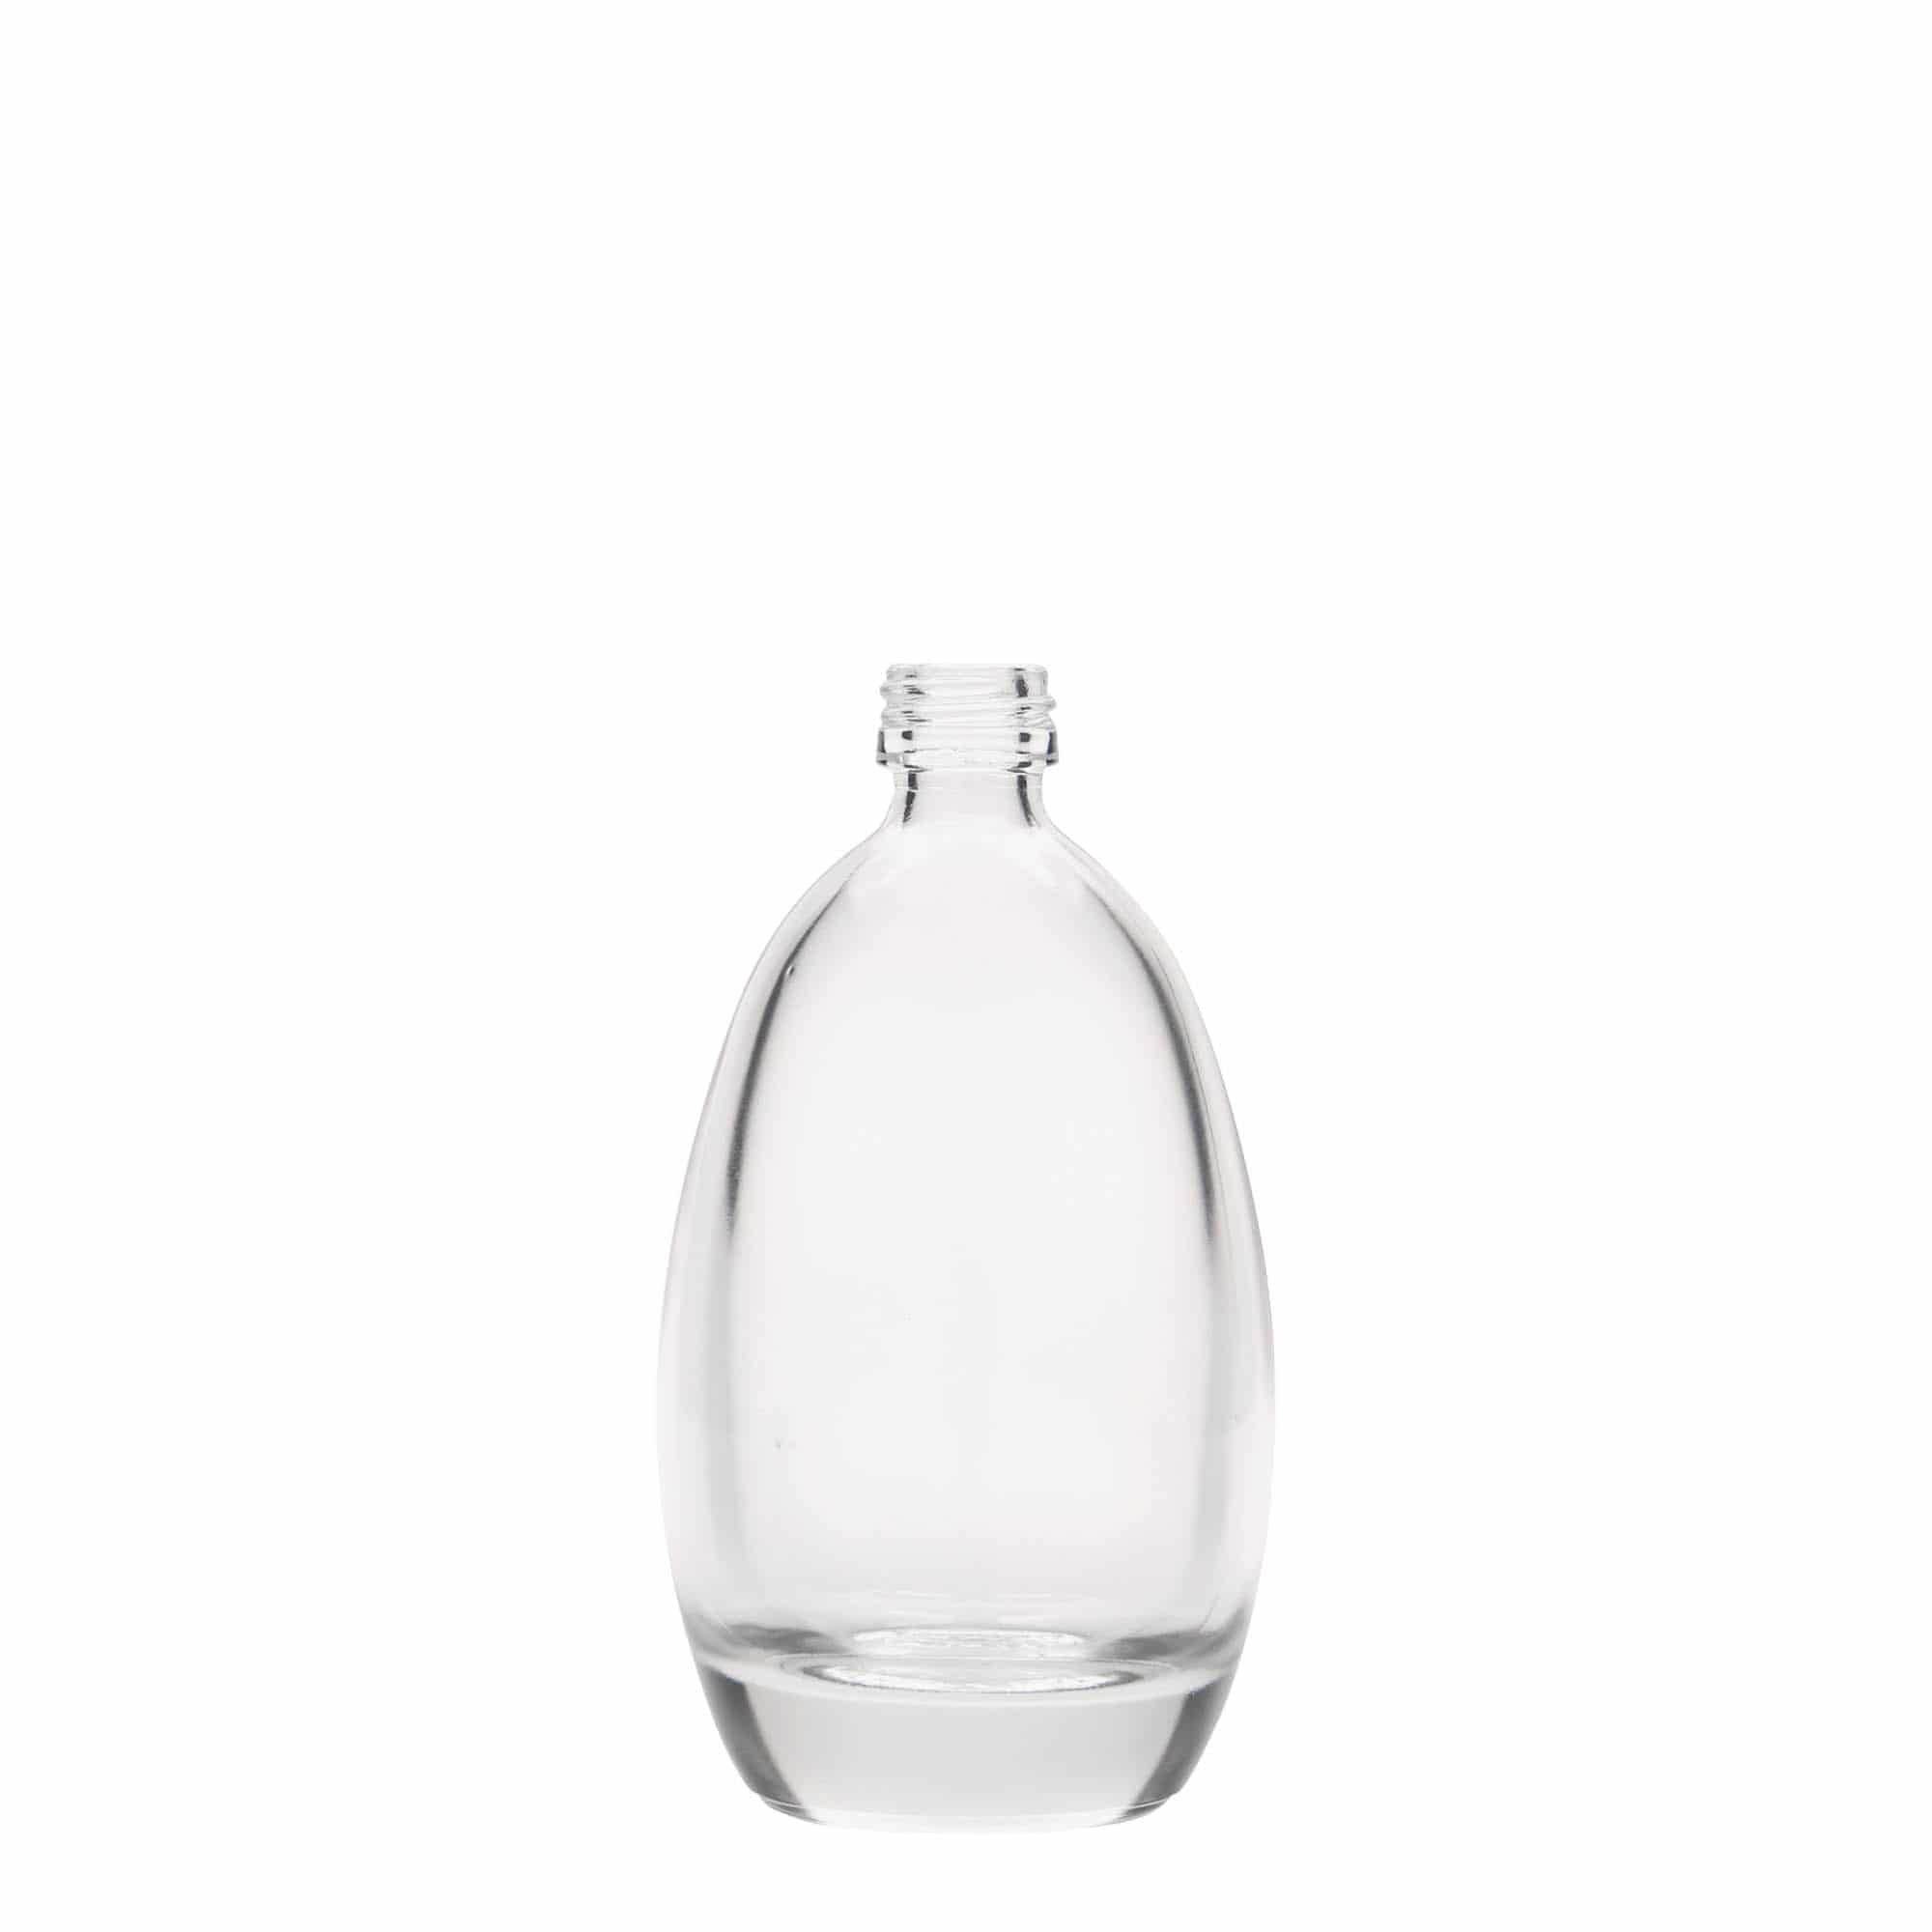 100 ml glass bottle 'Ei', closure: PP 18